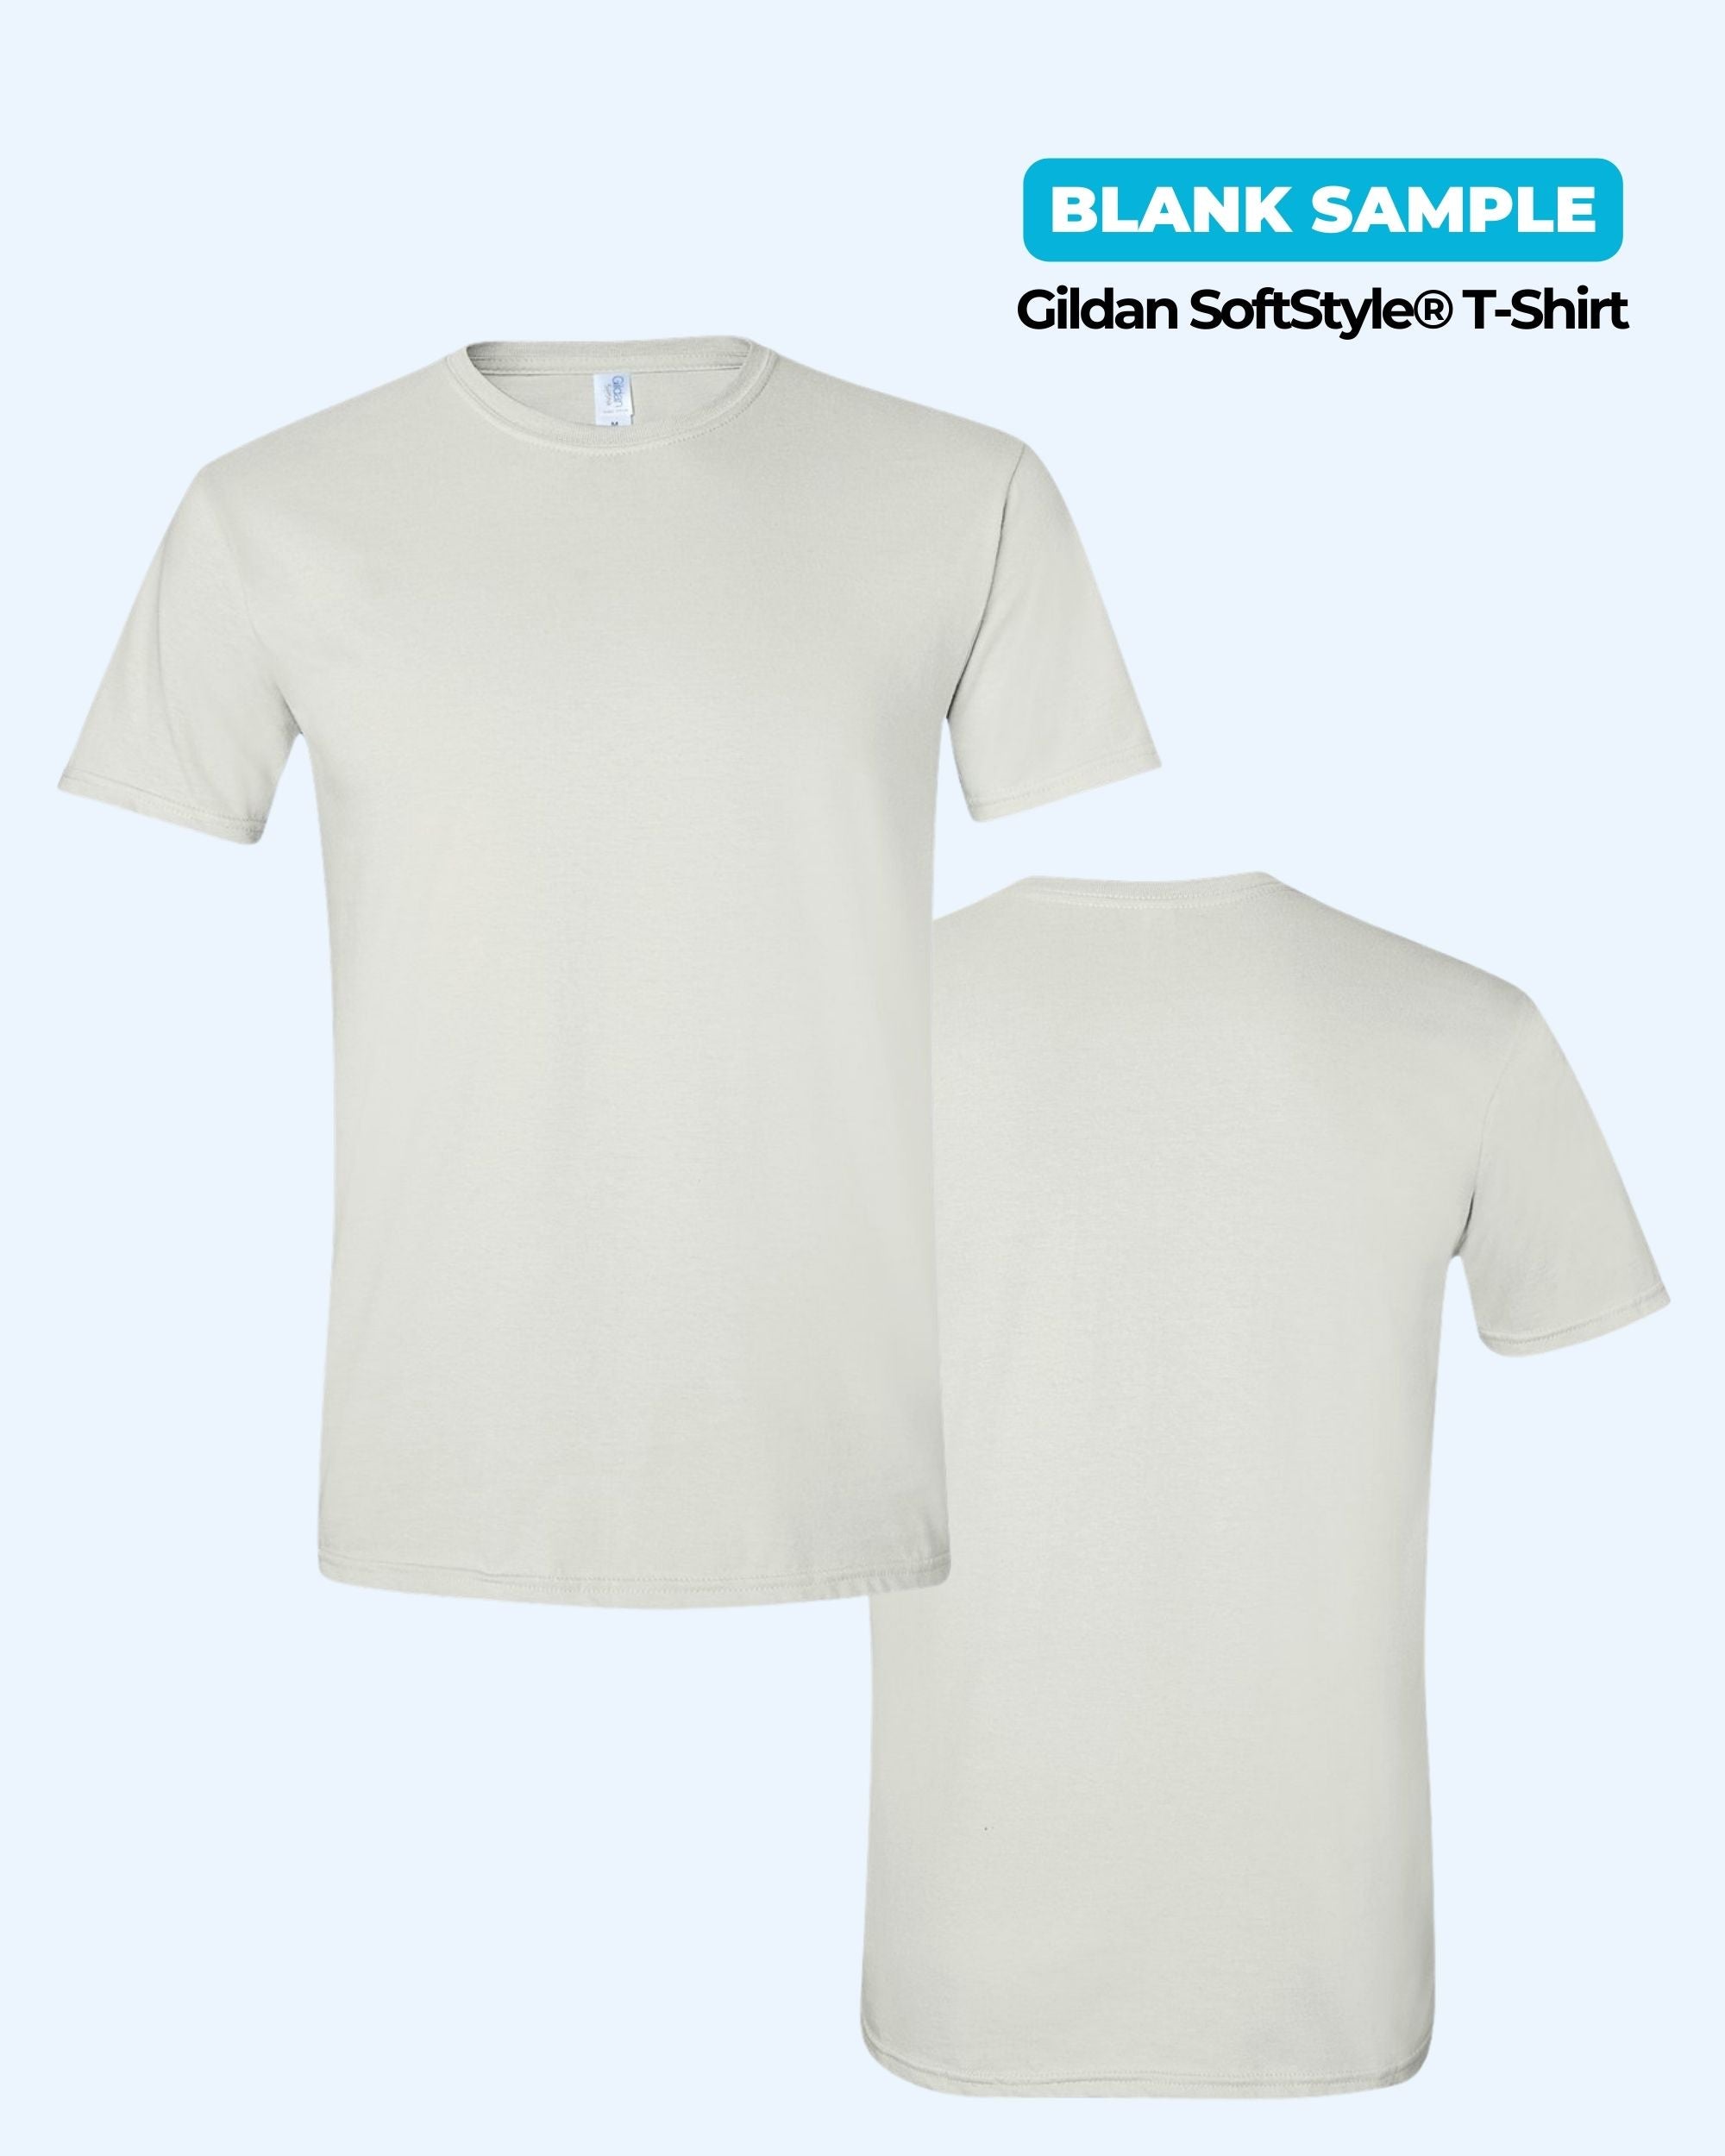 Blank Sample (Gildan SoftStyle - 64000)